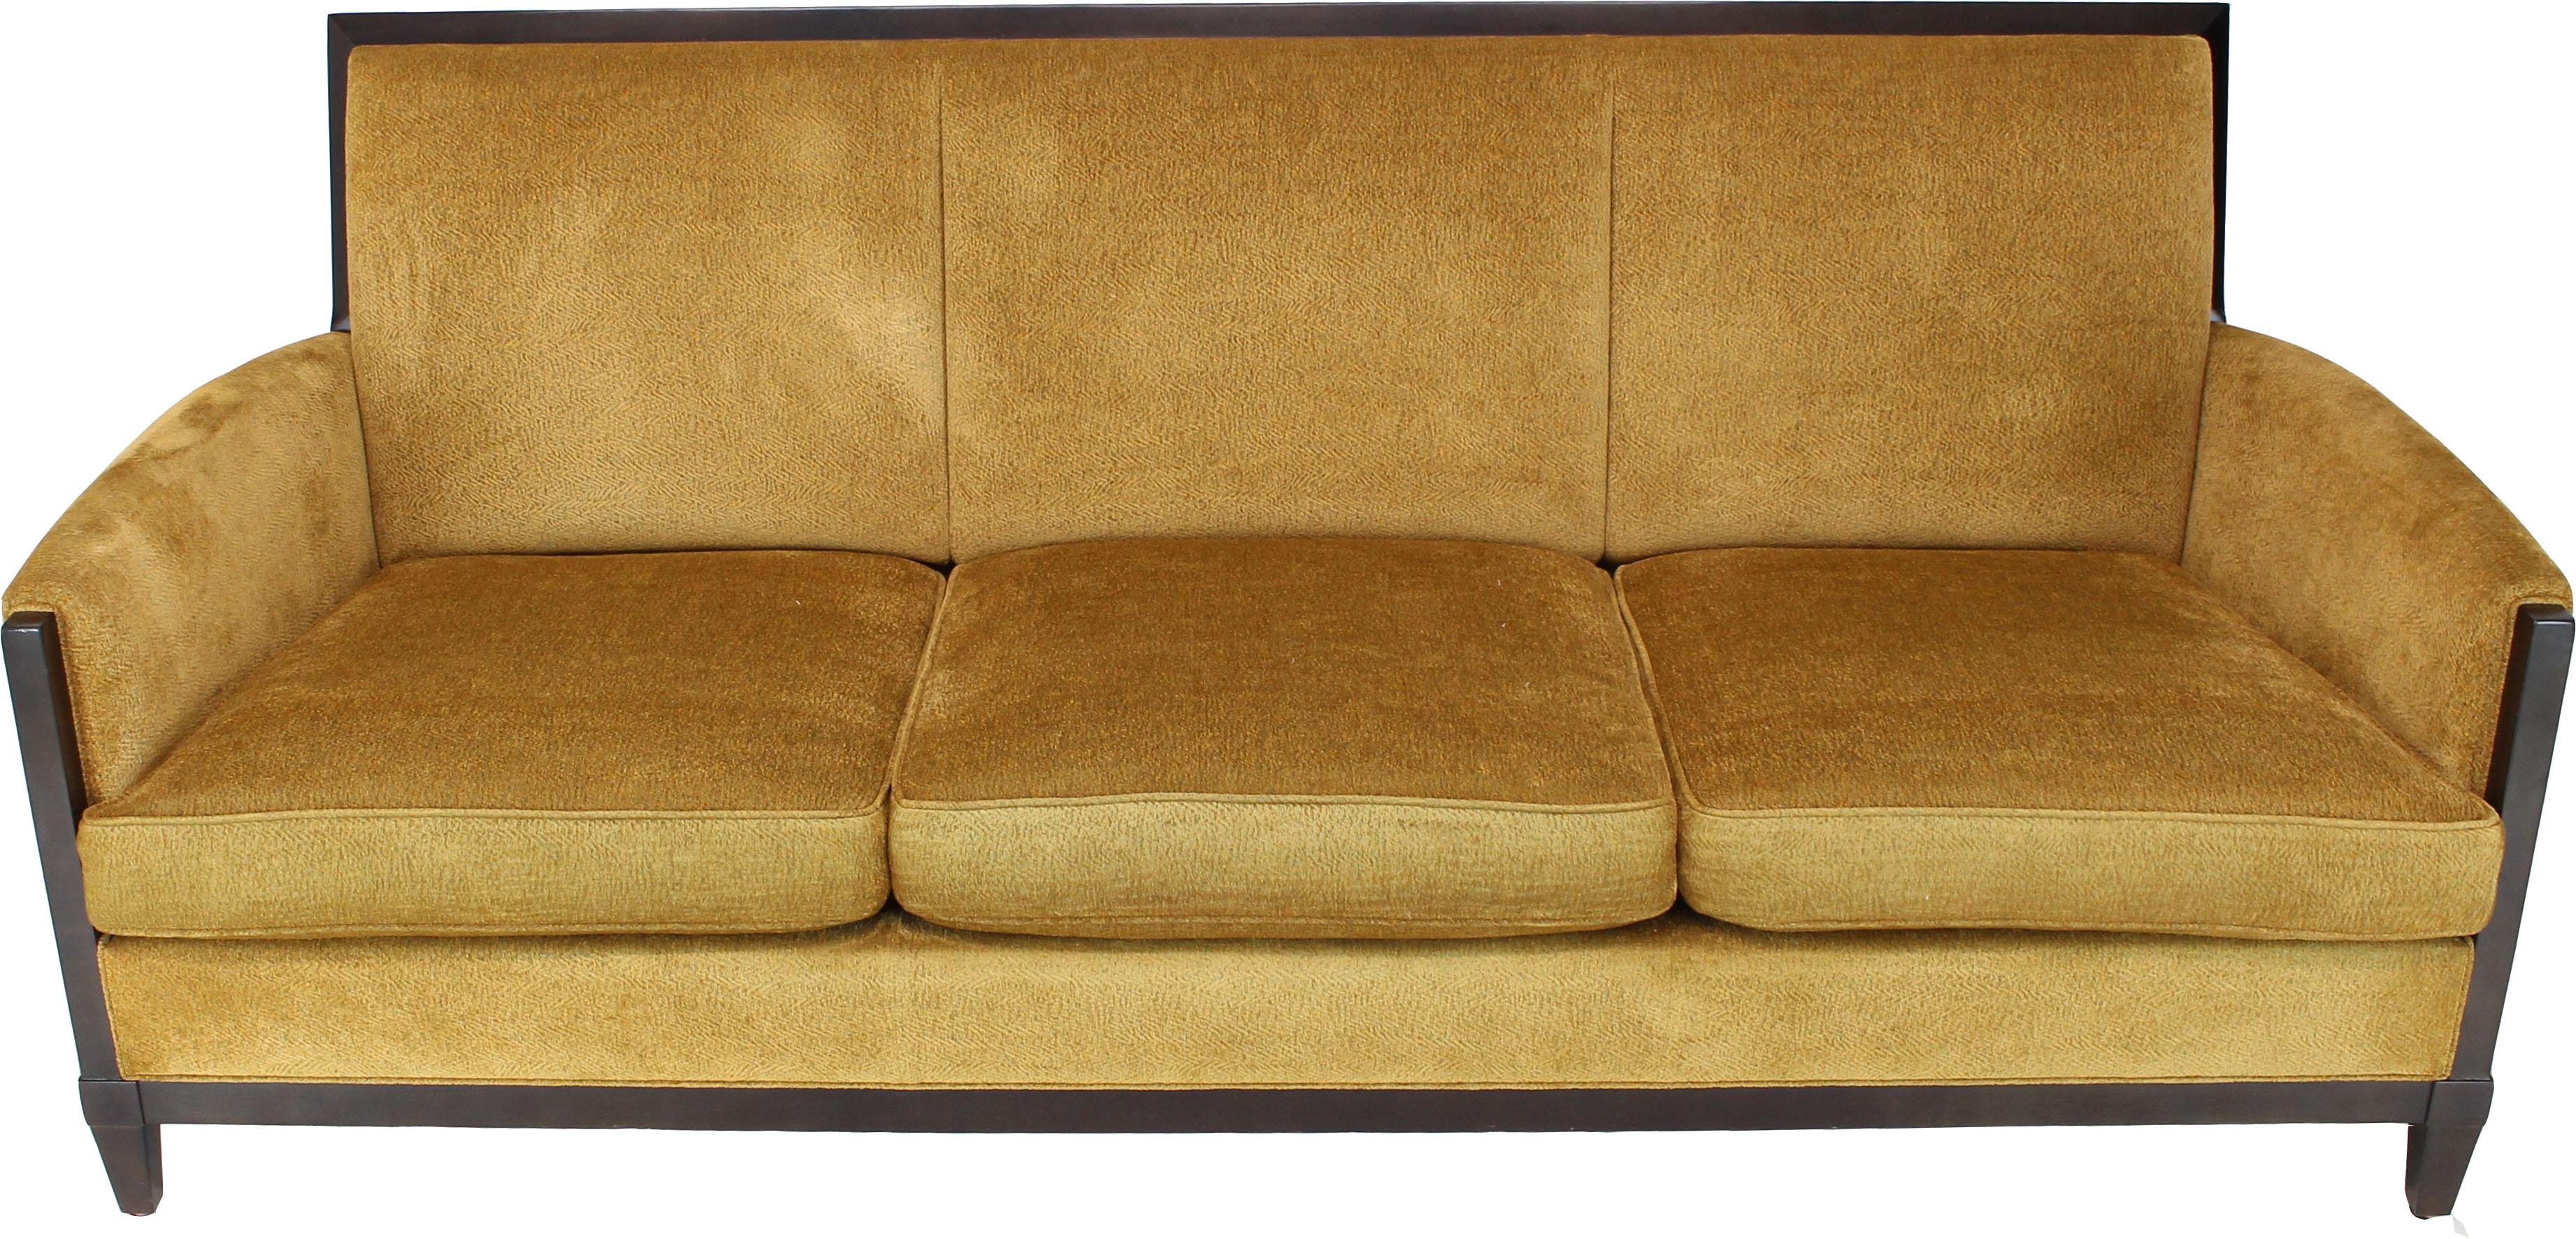 luxury sofa sale